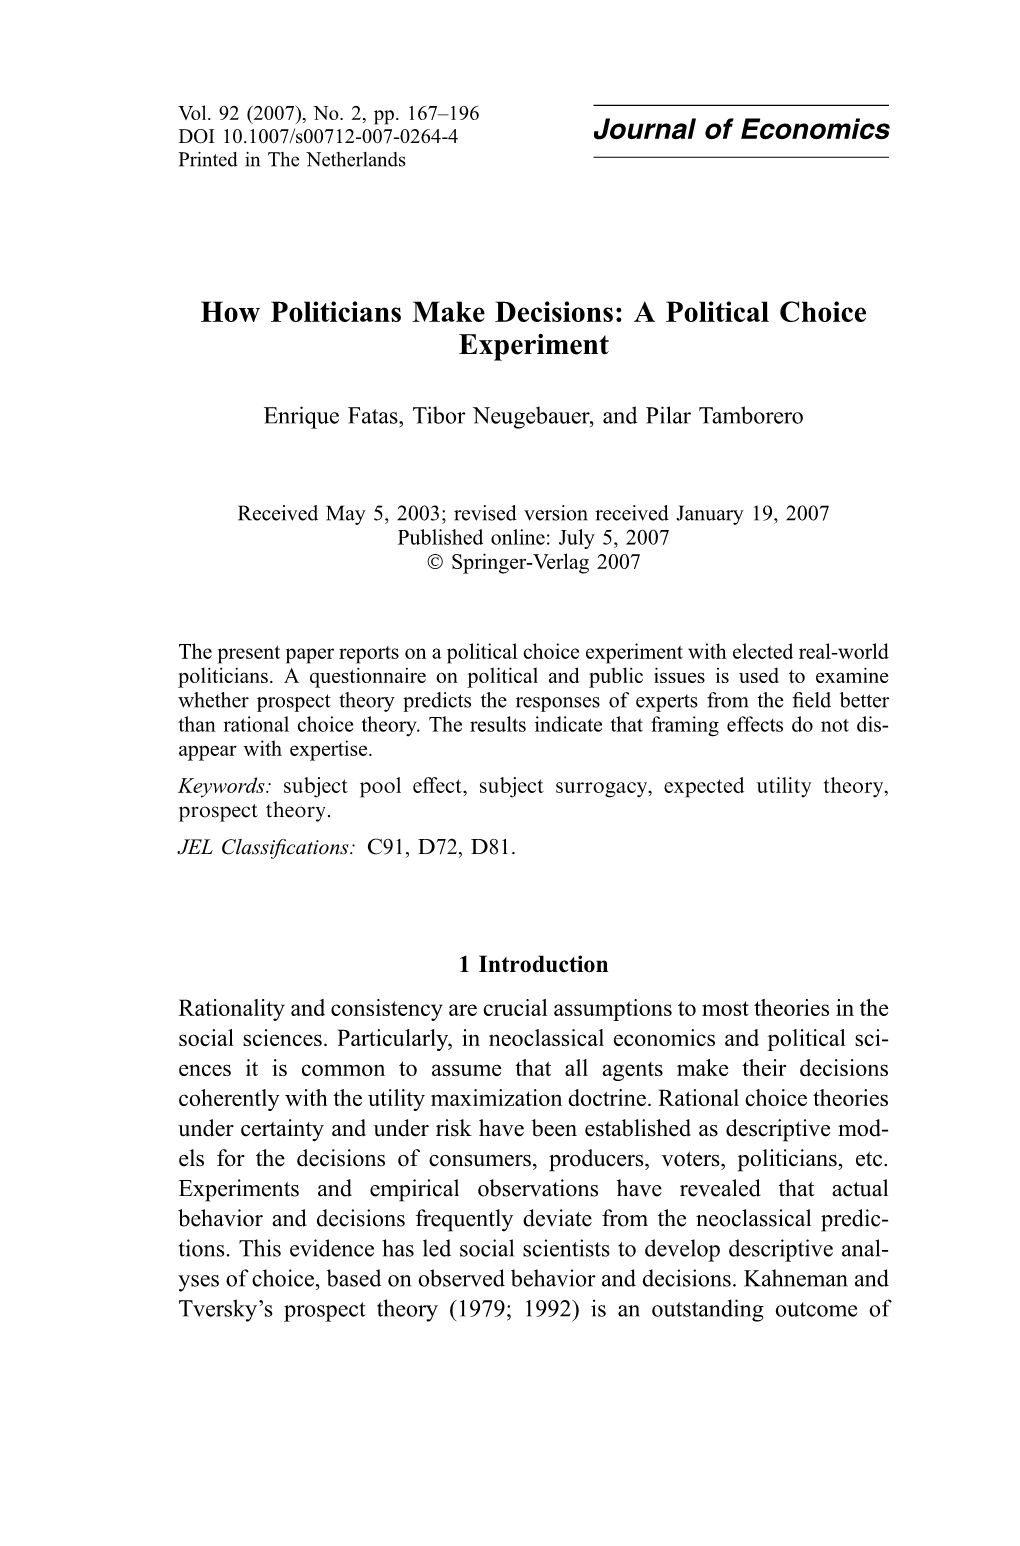 How Politicians Make Decisions: a Political Choice Experiment